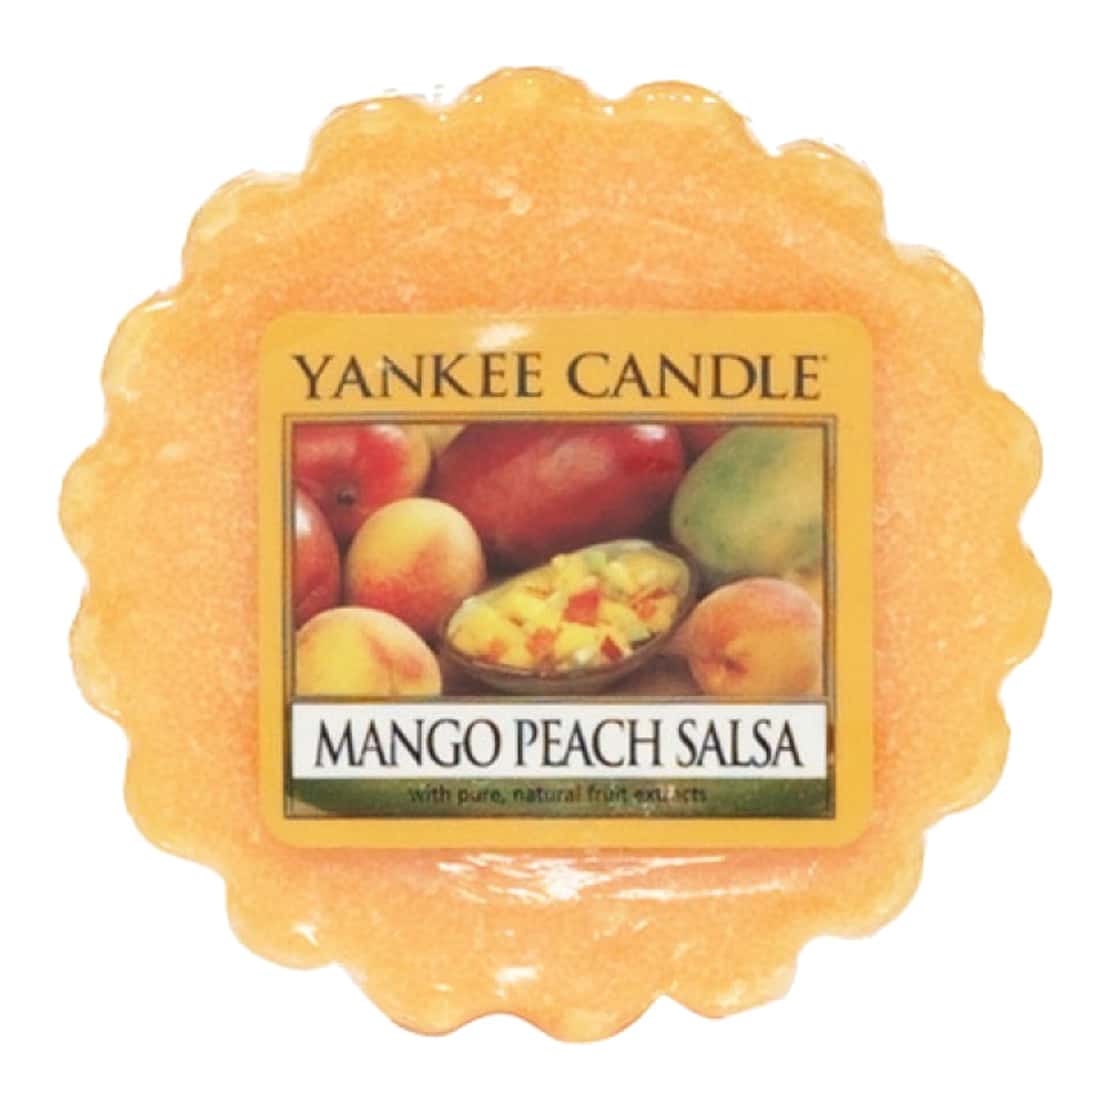 Yankee Candle Mango Peach Salsa Wax Melt Tart